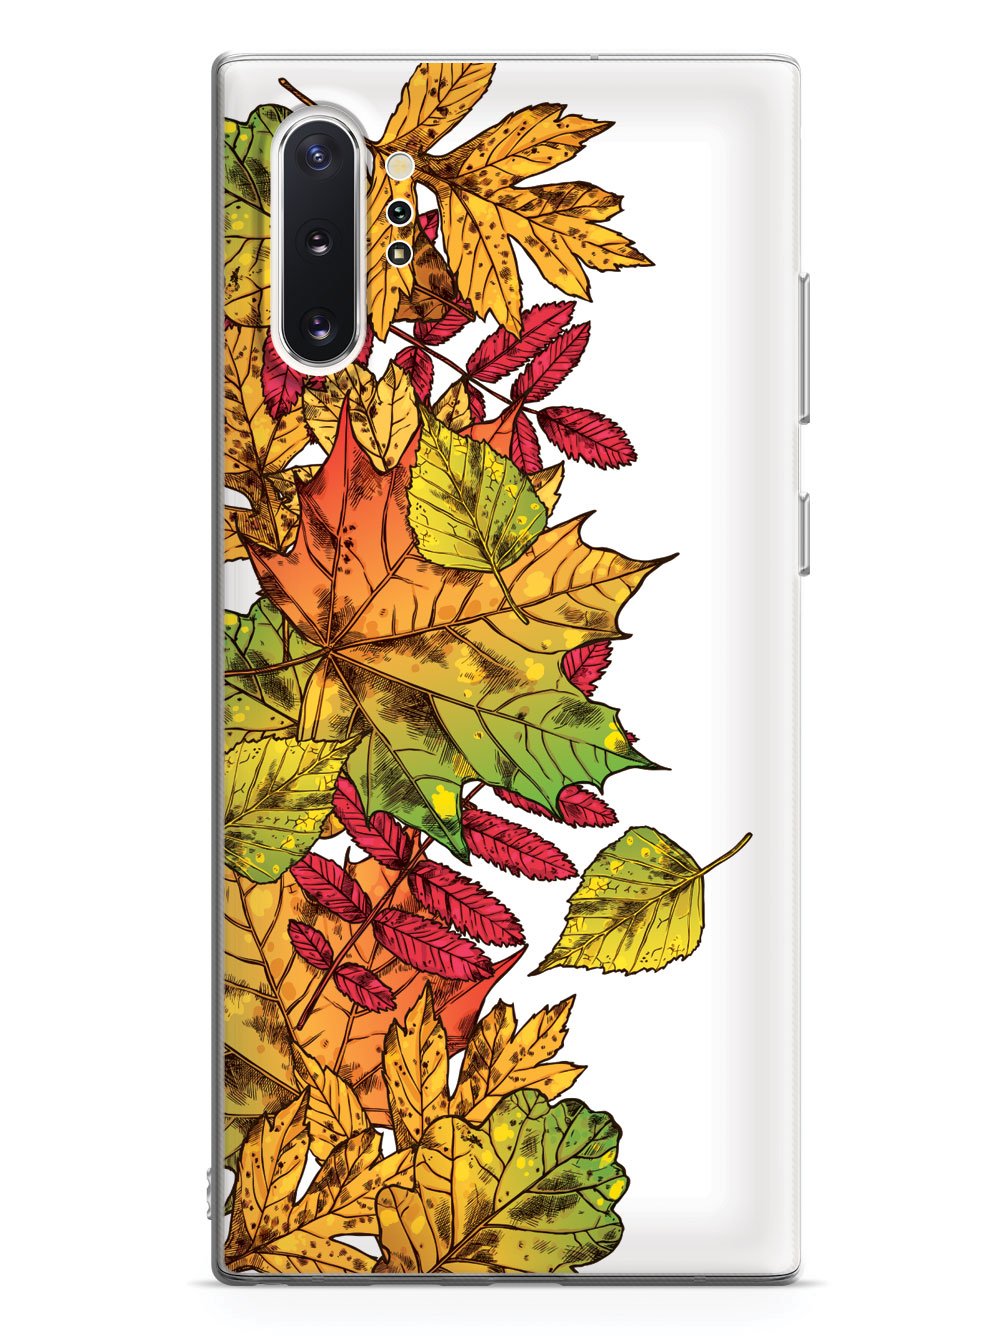 Autumn Leaves Illustration - White Case